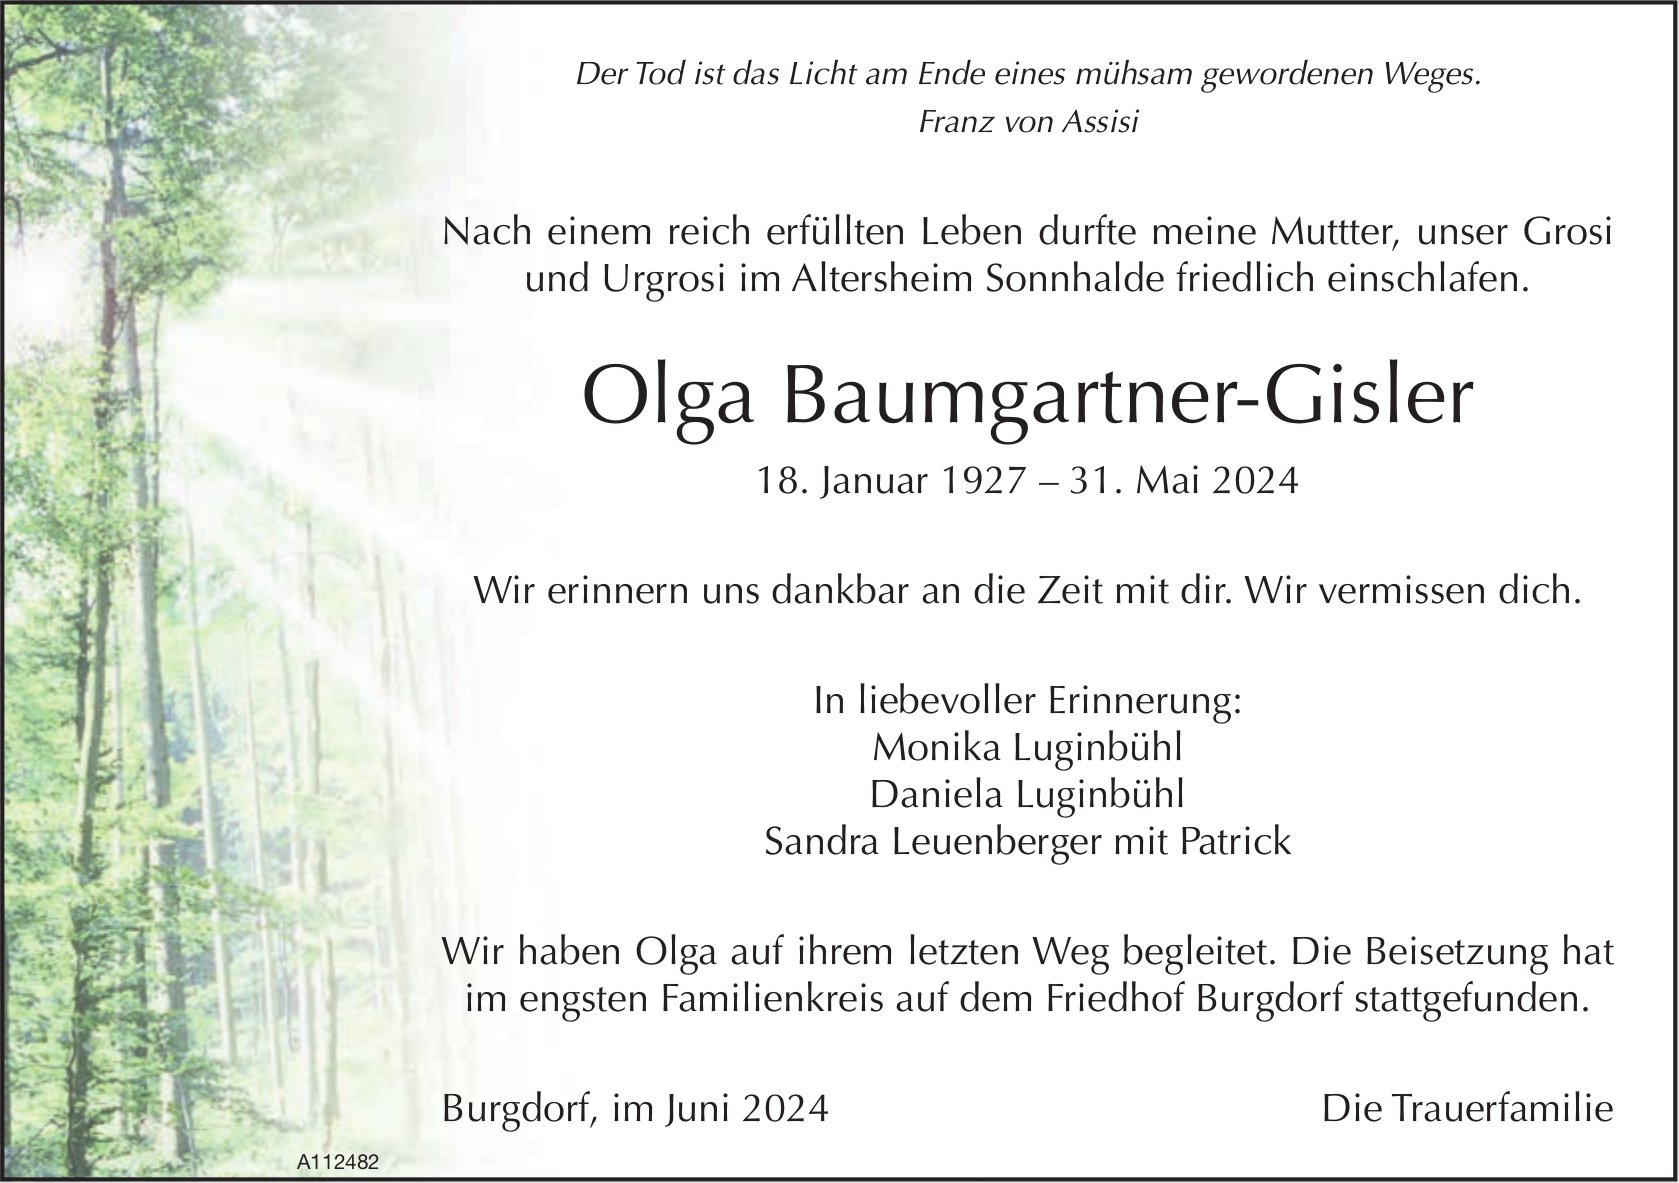 Olga Baumgartner-Gisler, Mai 2024 / TA